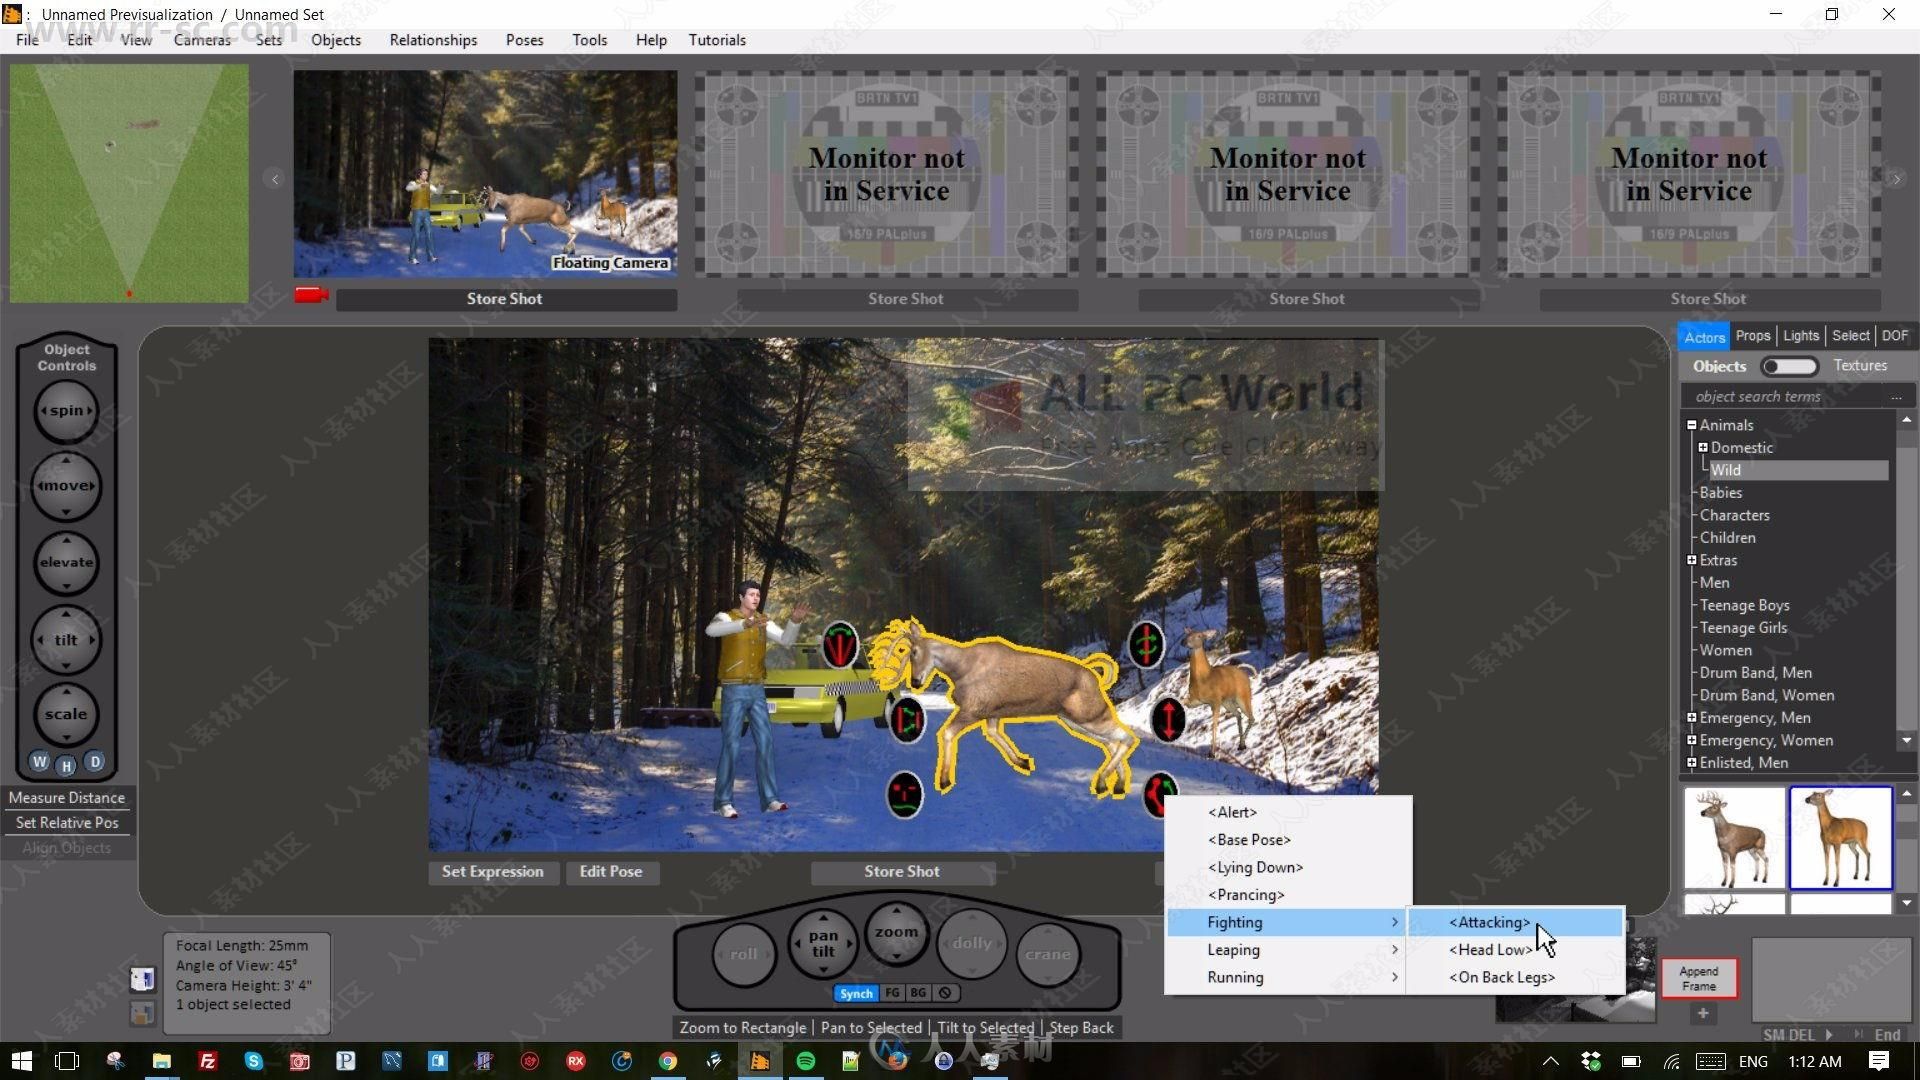 FrameForge Storyboard Studio影视后期预演软件V4.03版